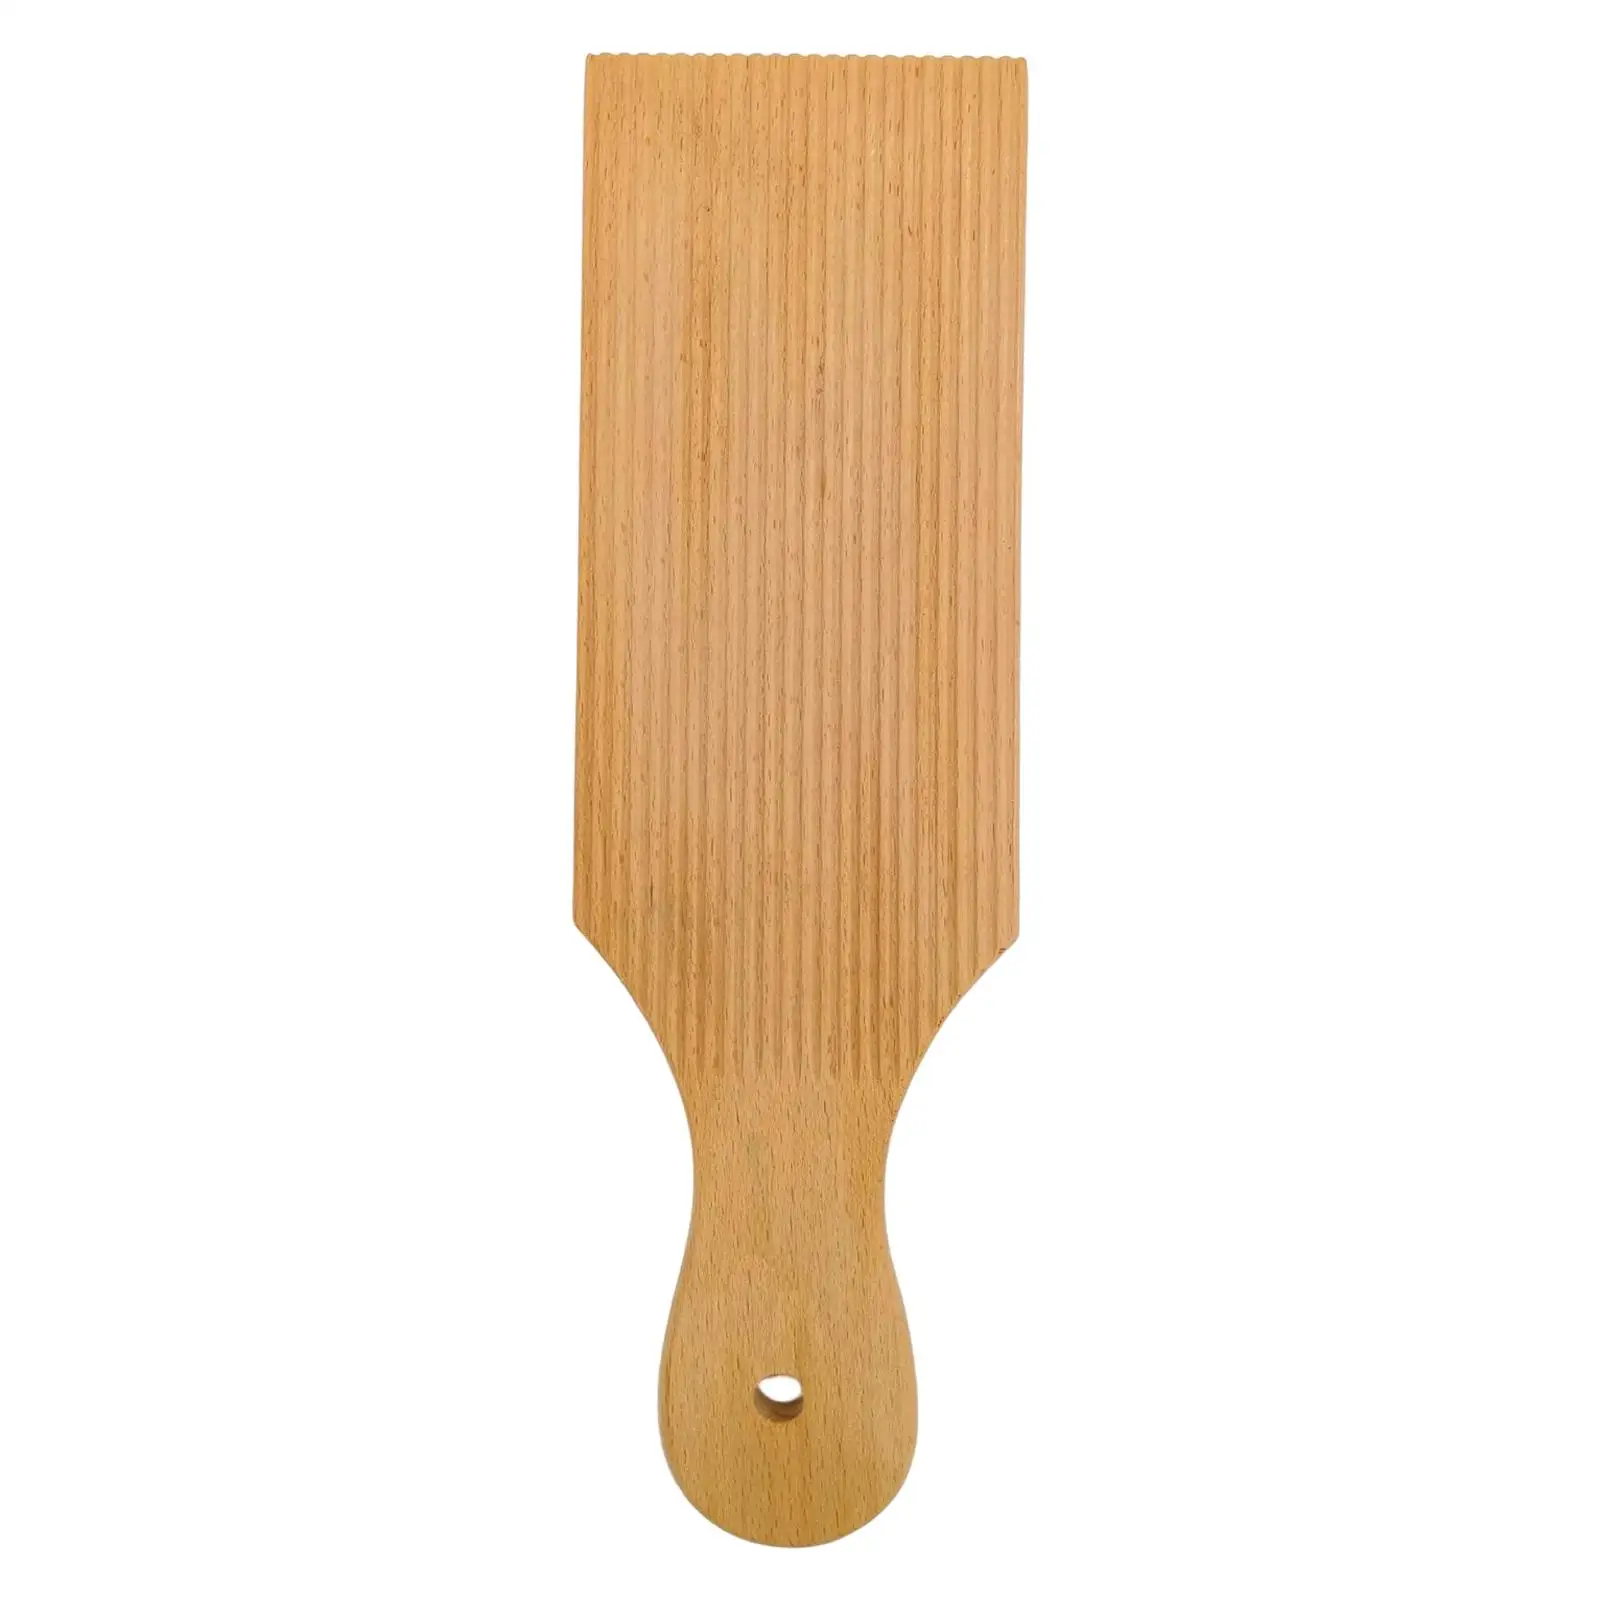 Gnocchi Pasta Plate Pasta Tools/Butter Maker Wooden Stripe Pattern/Spiral Pasta